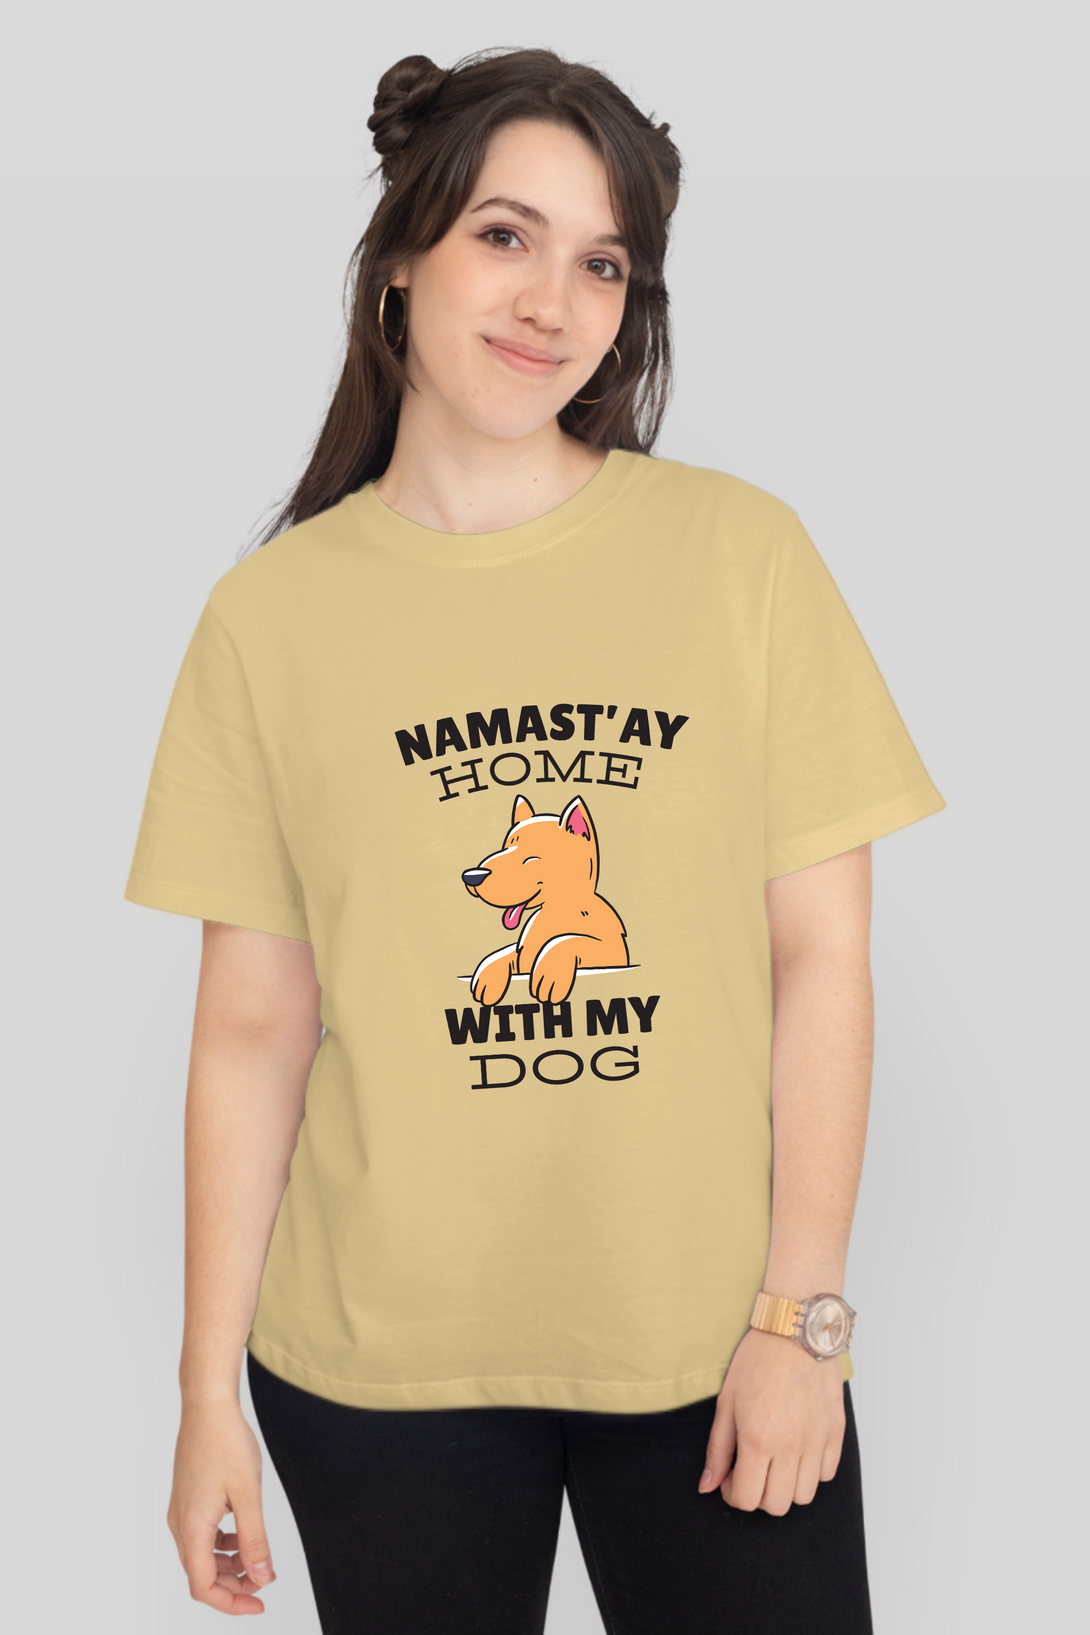 Namastay Home Dog Printed T-Shirt For Women - WowWaves - 8